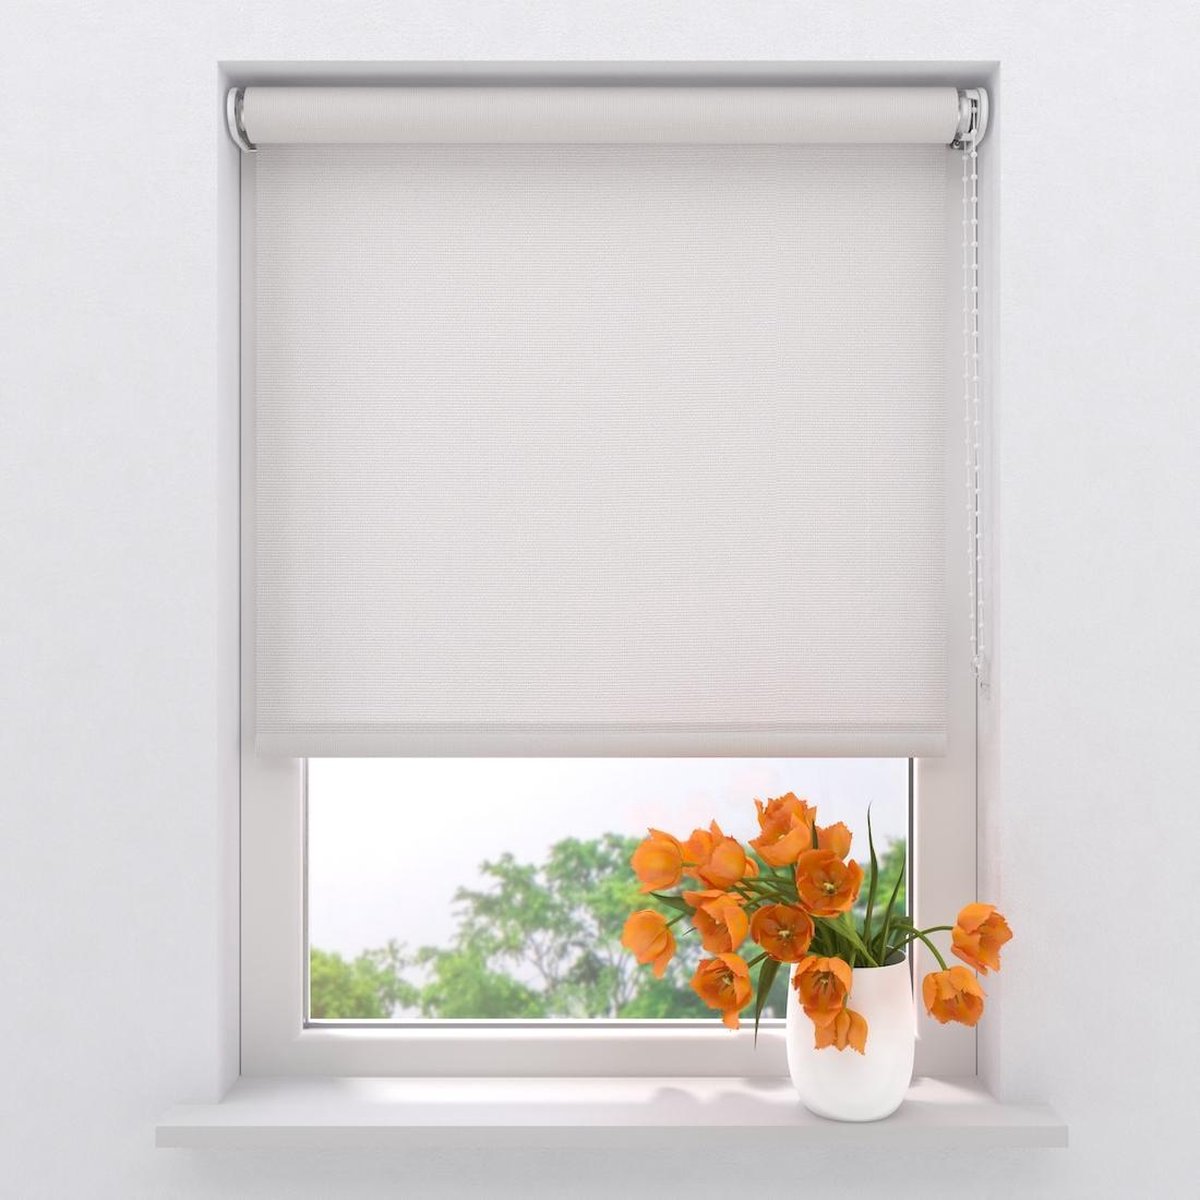 Rolgordijn Easy Lichtdoorlatend - Bright White - 230 x 190 cm